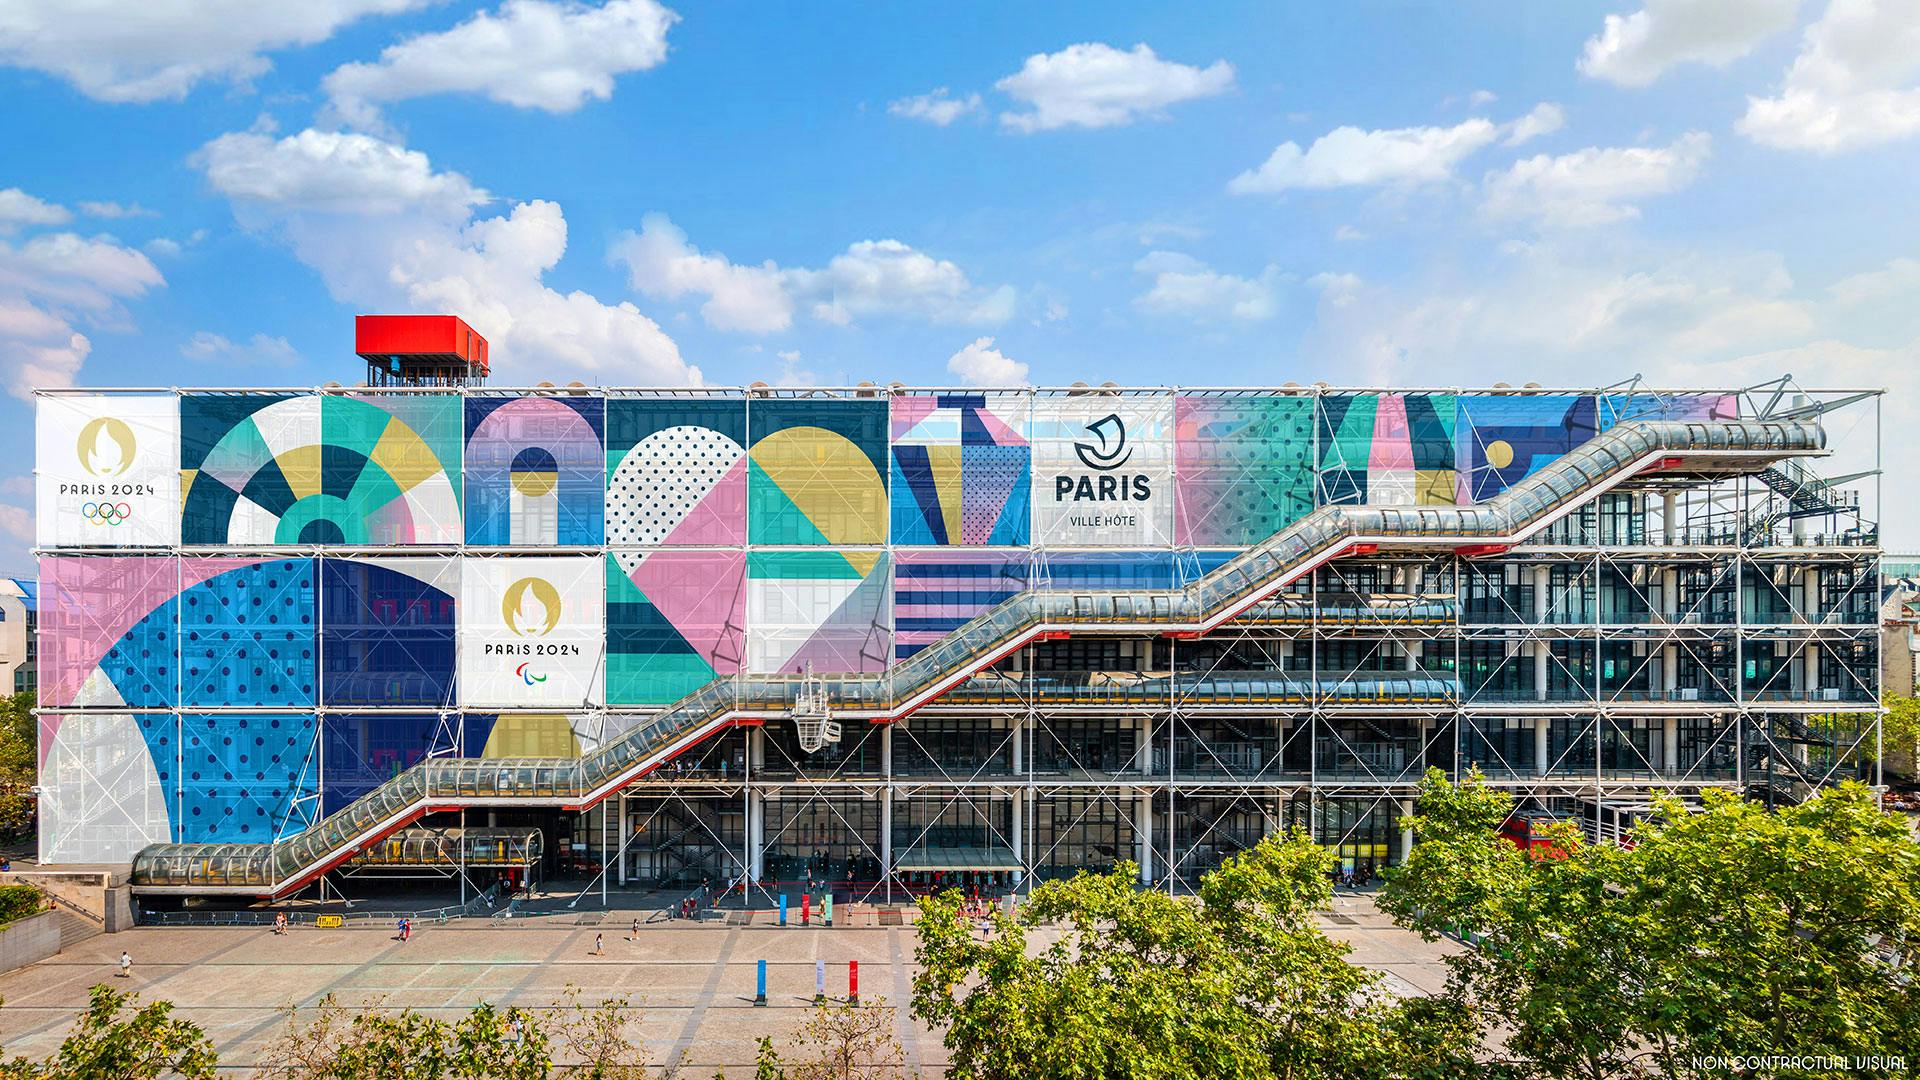 Paris 2024 Olympics reveals the next phase of its visual identity